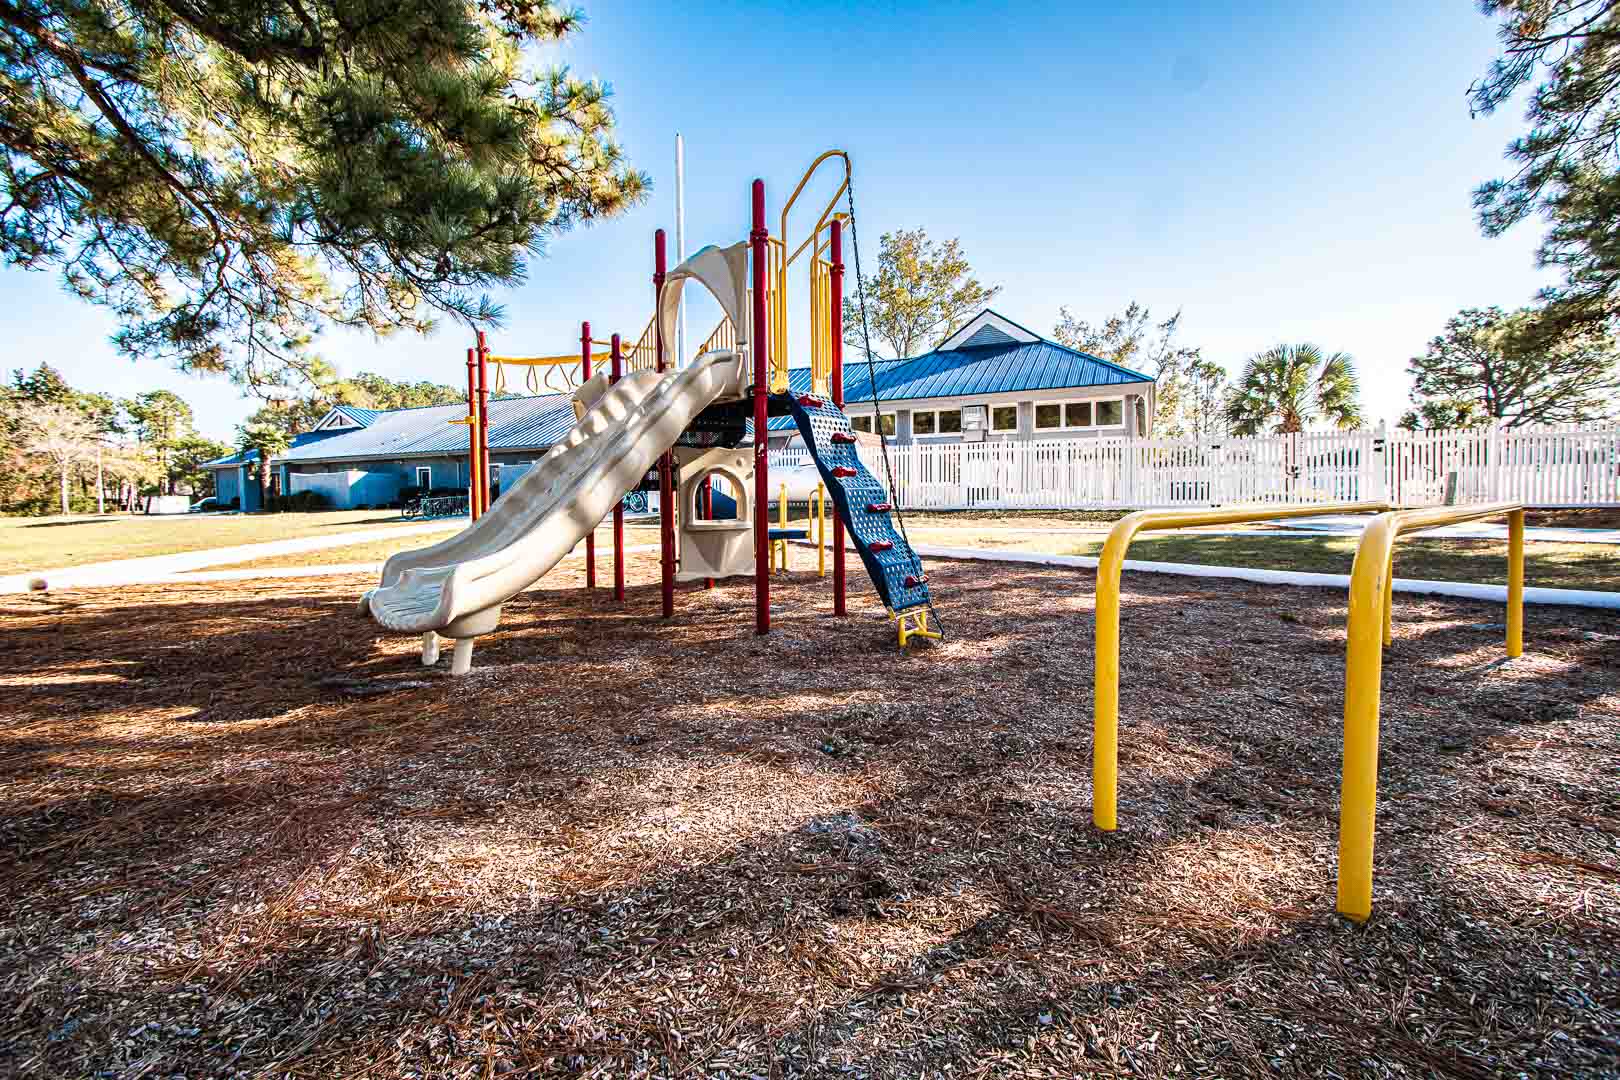 An outdoor children's playground at VRI's Sandcastle Cove in New Bern, North Carolina.